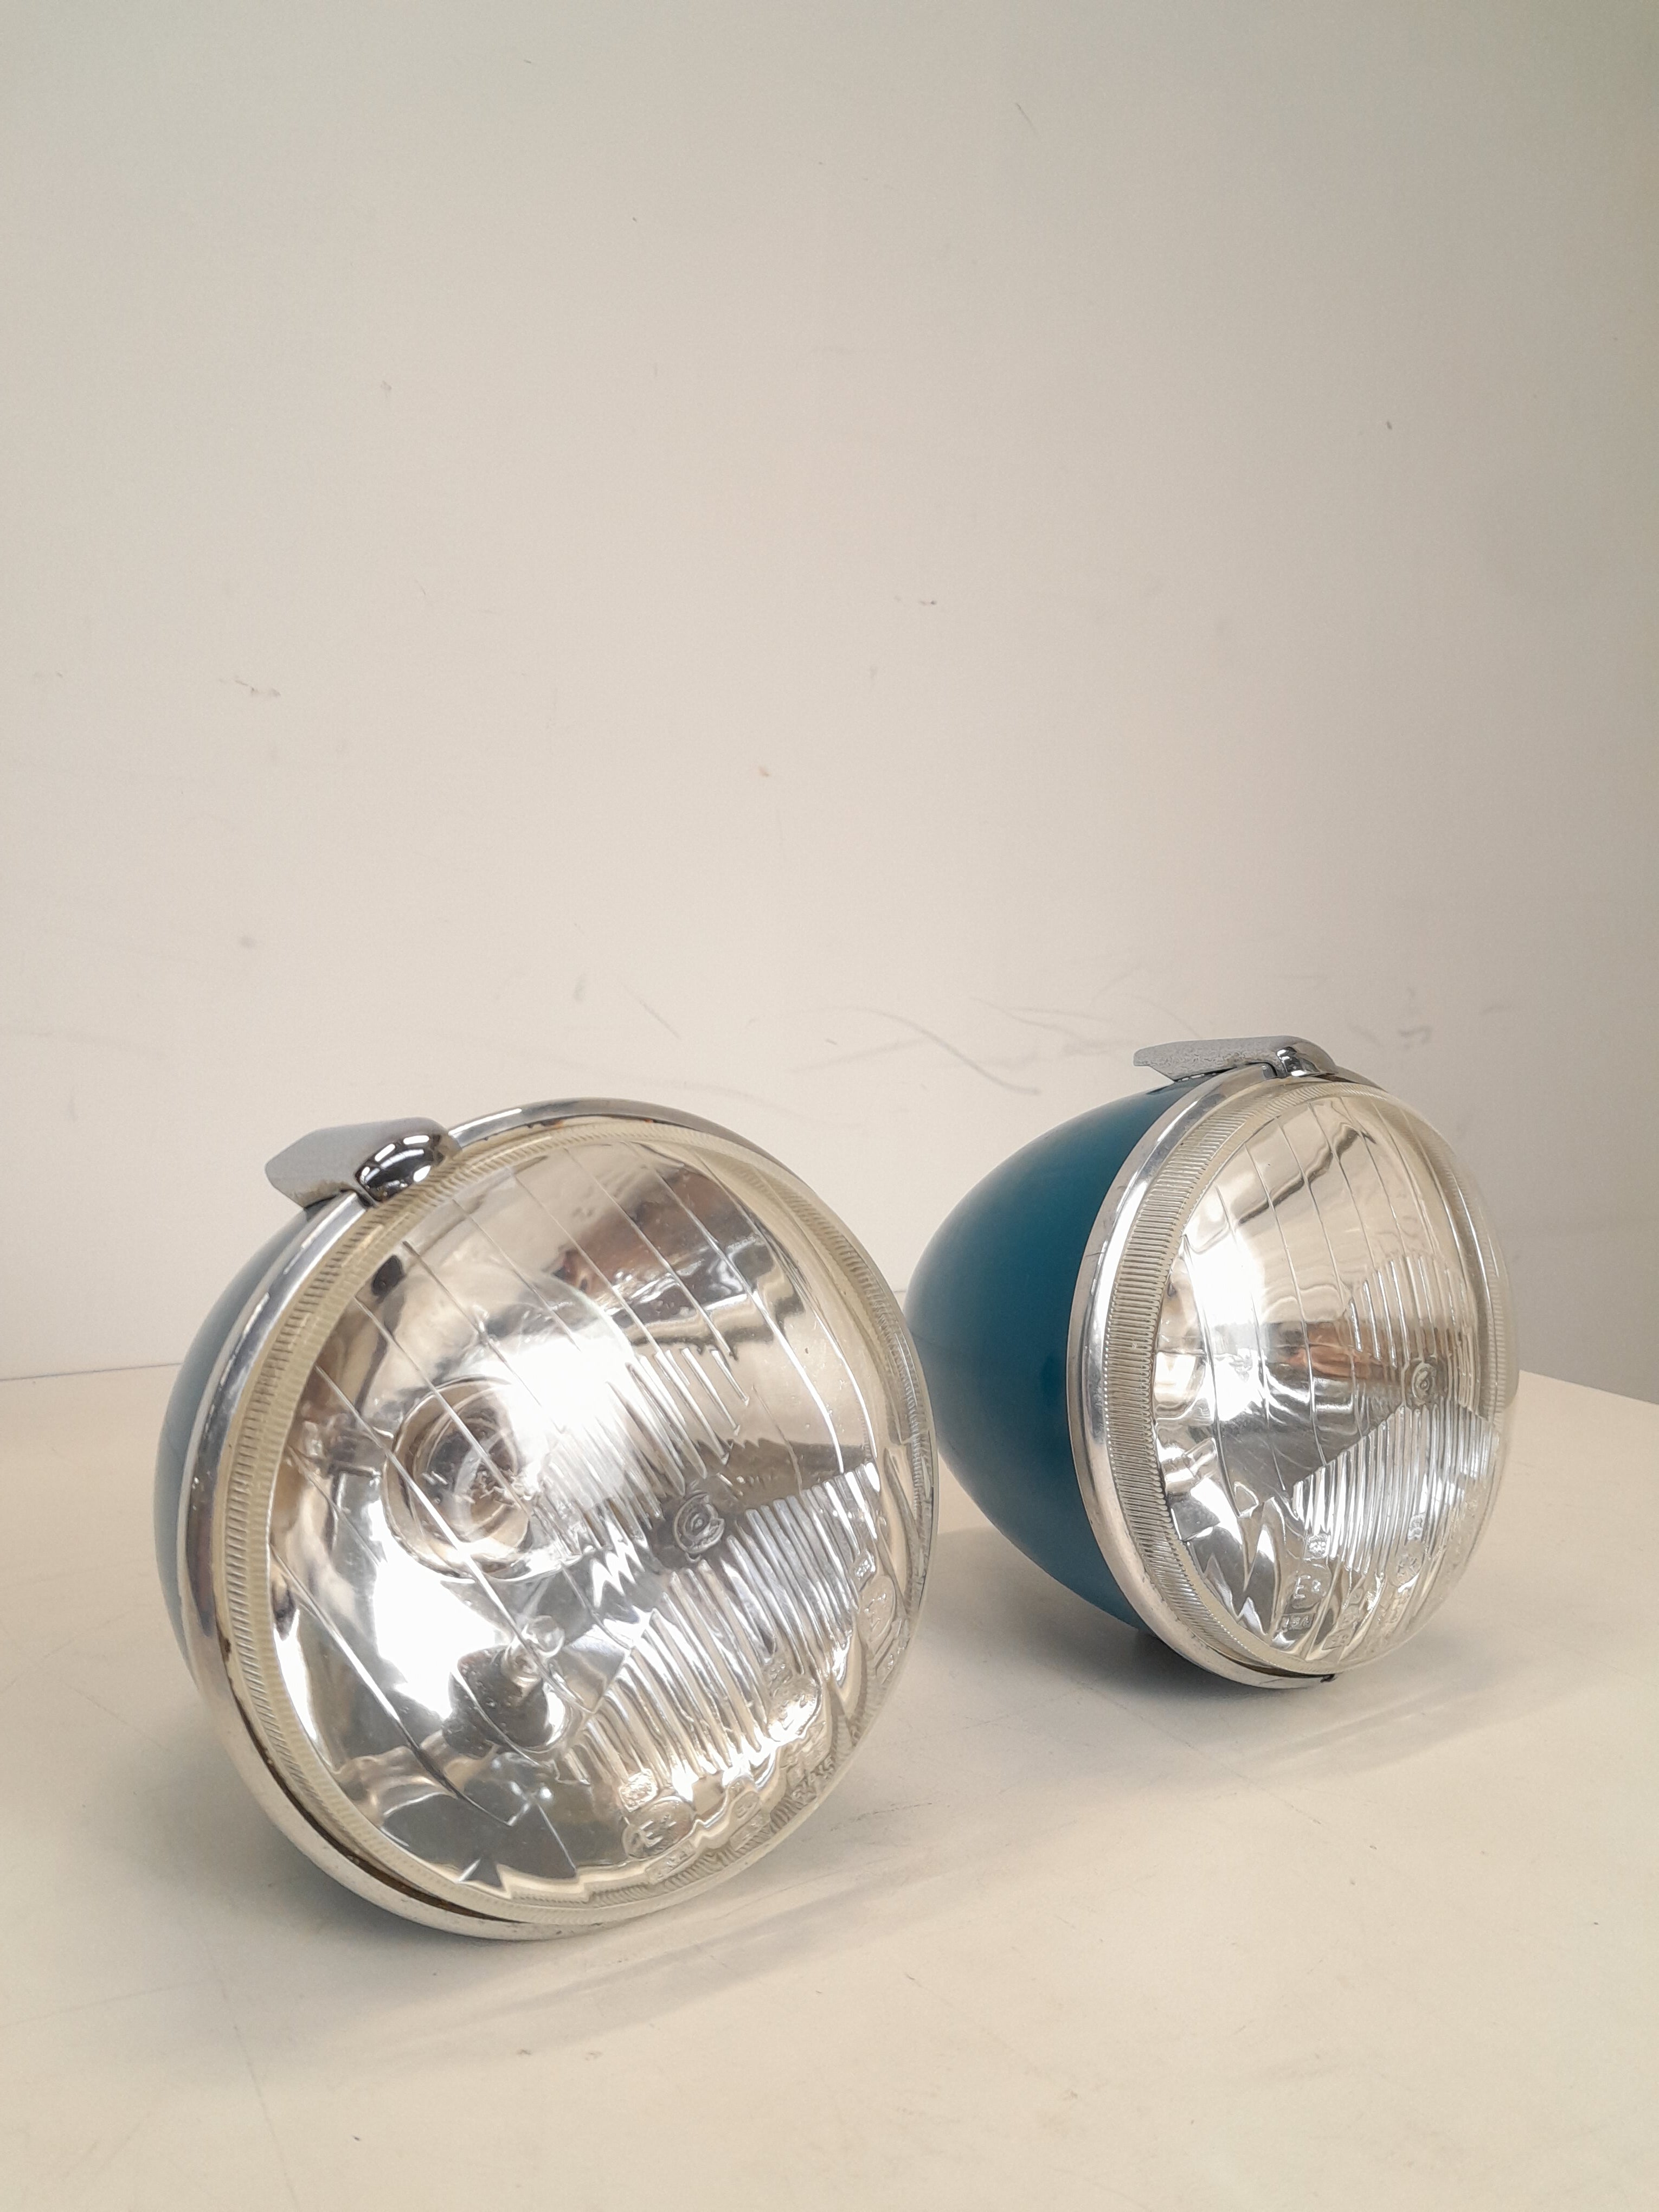 Pair of authentic Deux Chevaux headlights